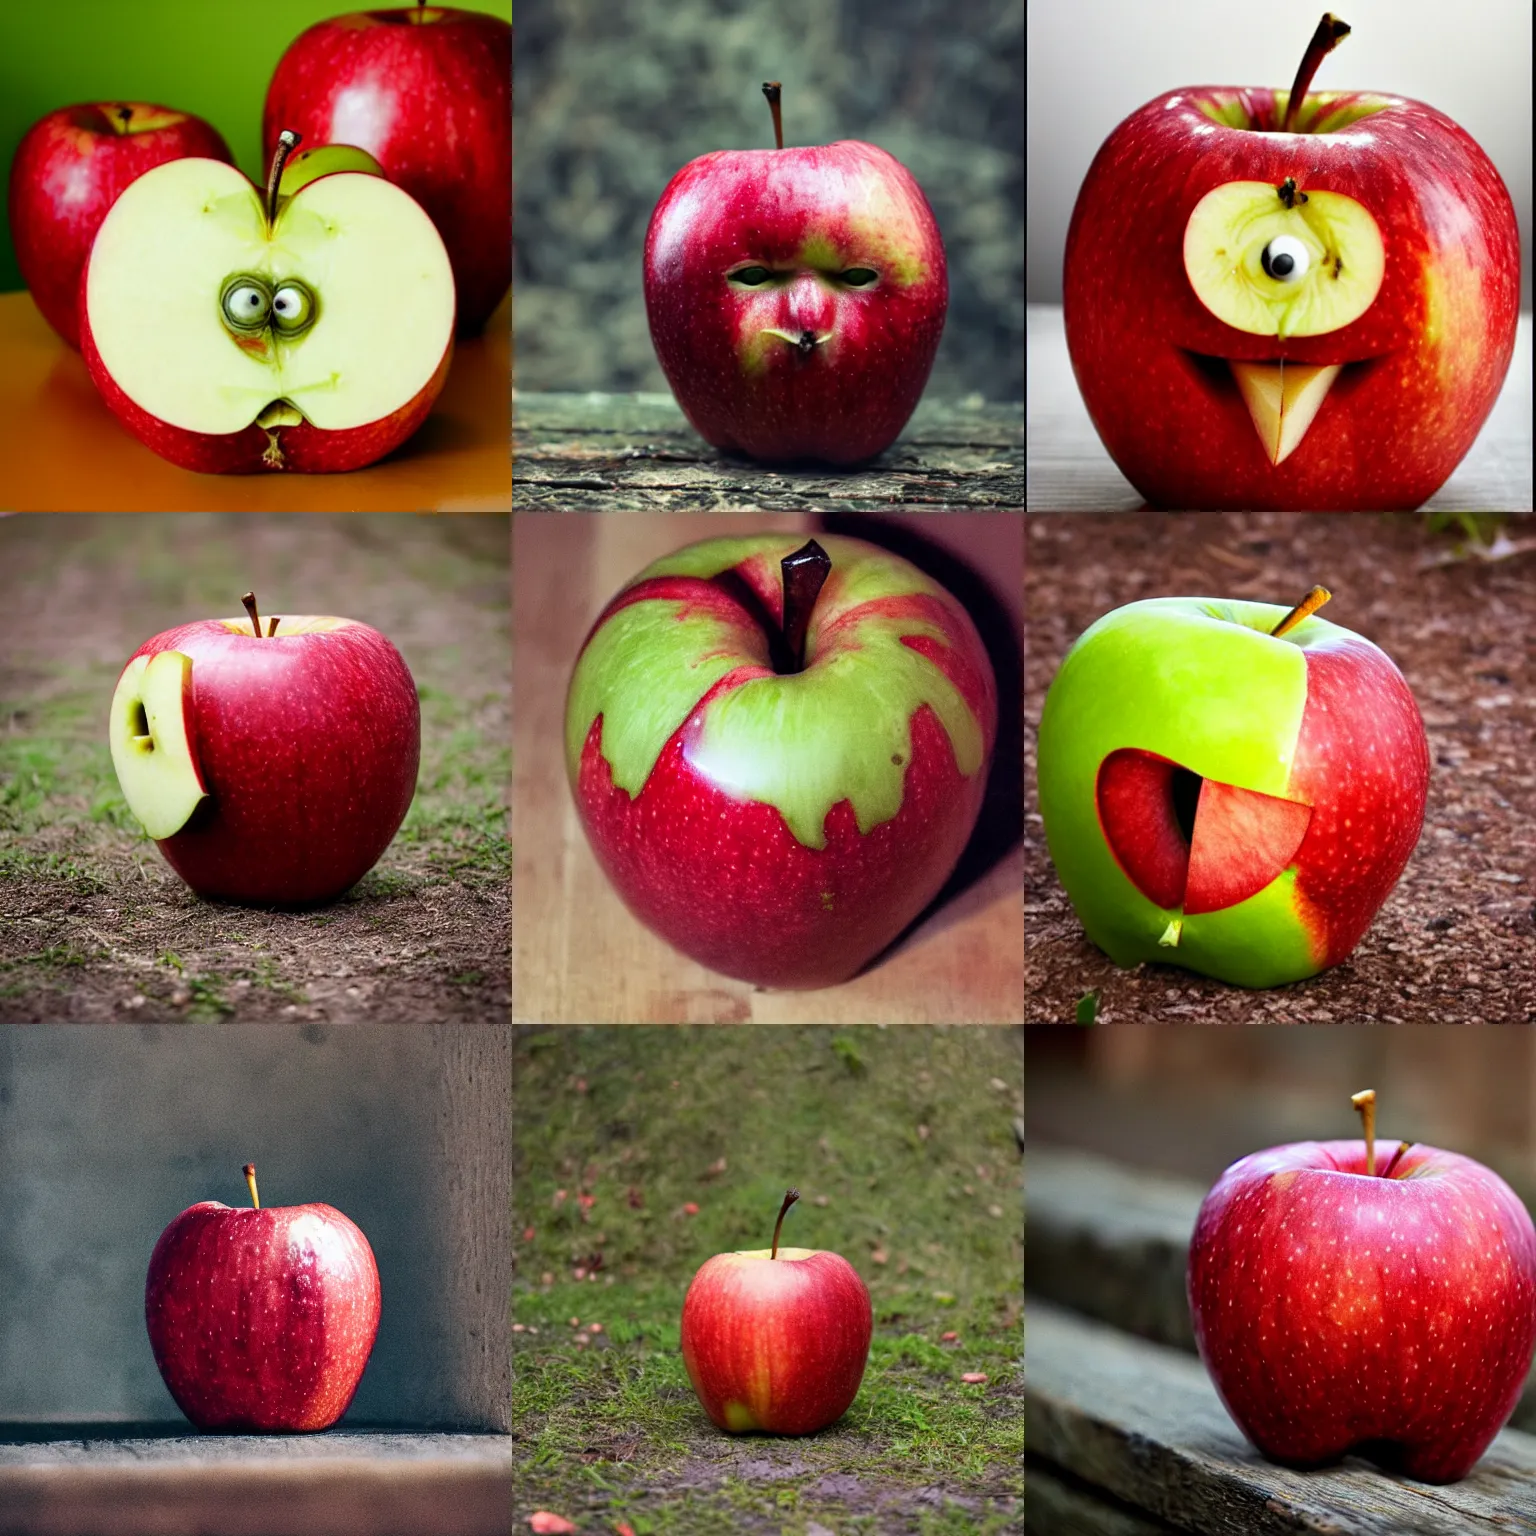 Prompt: an evil apple, menacing piece of fruit